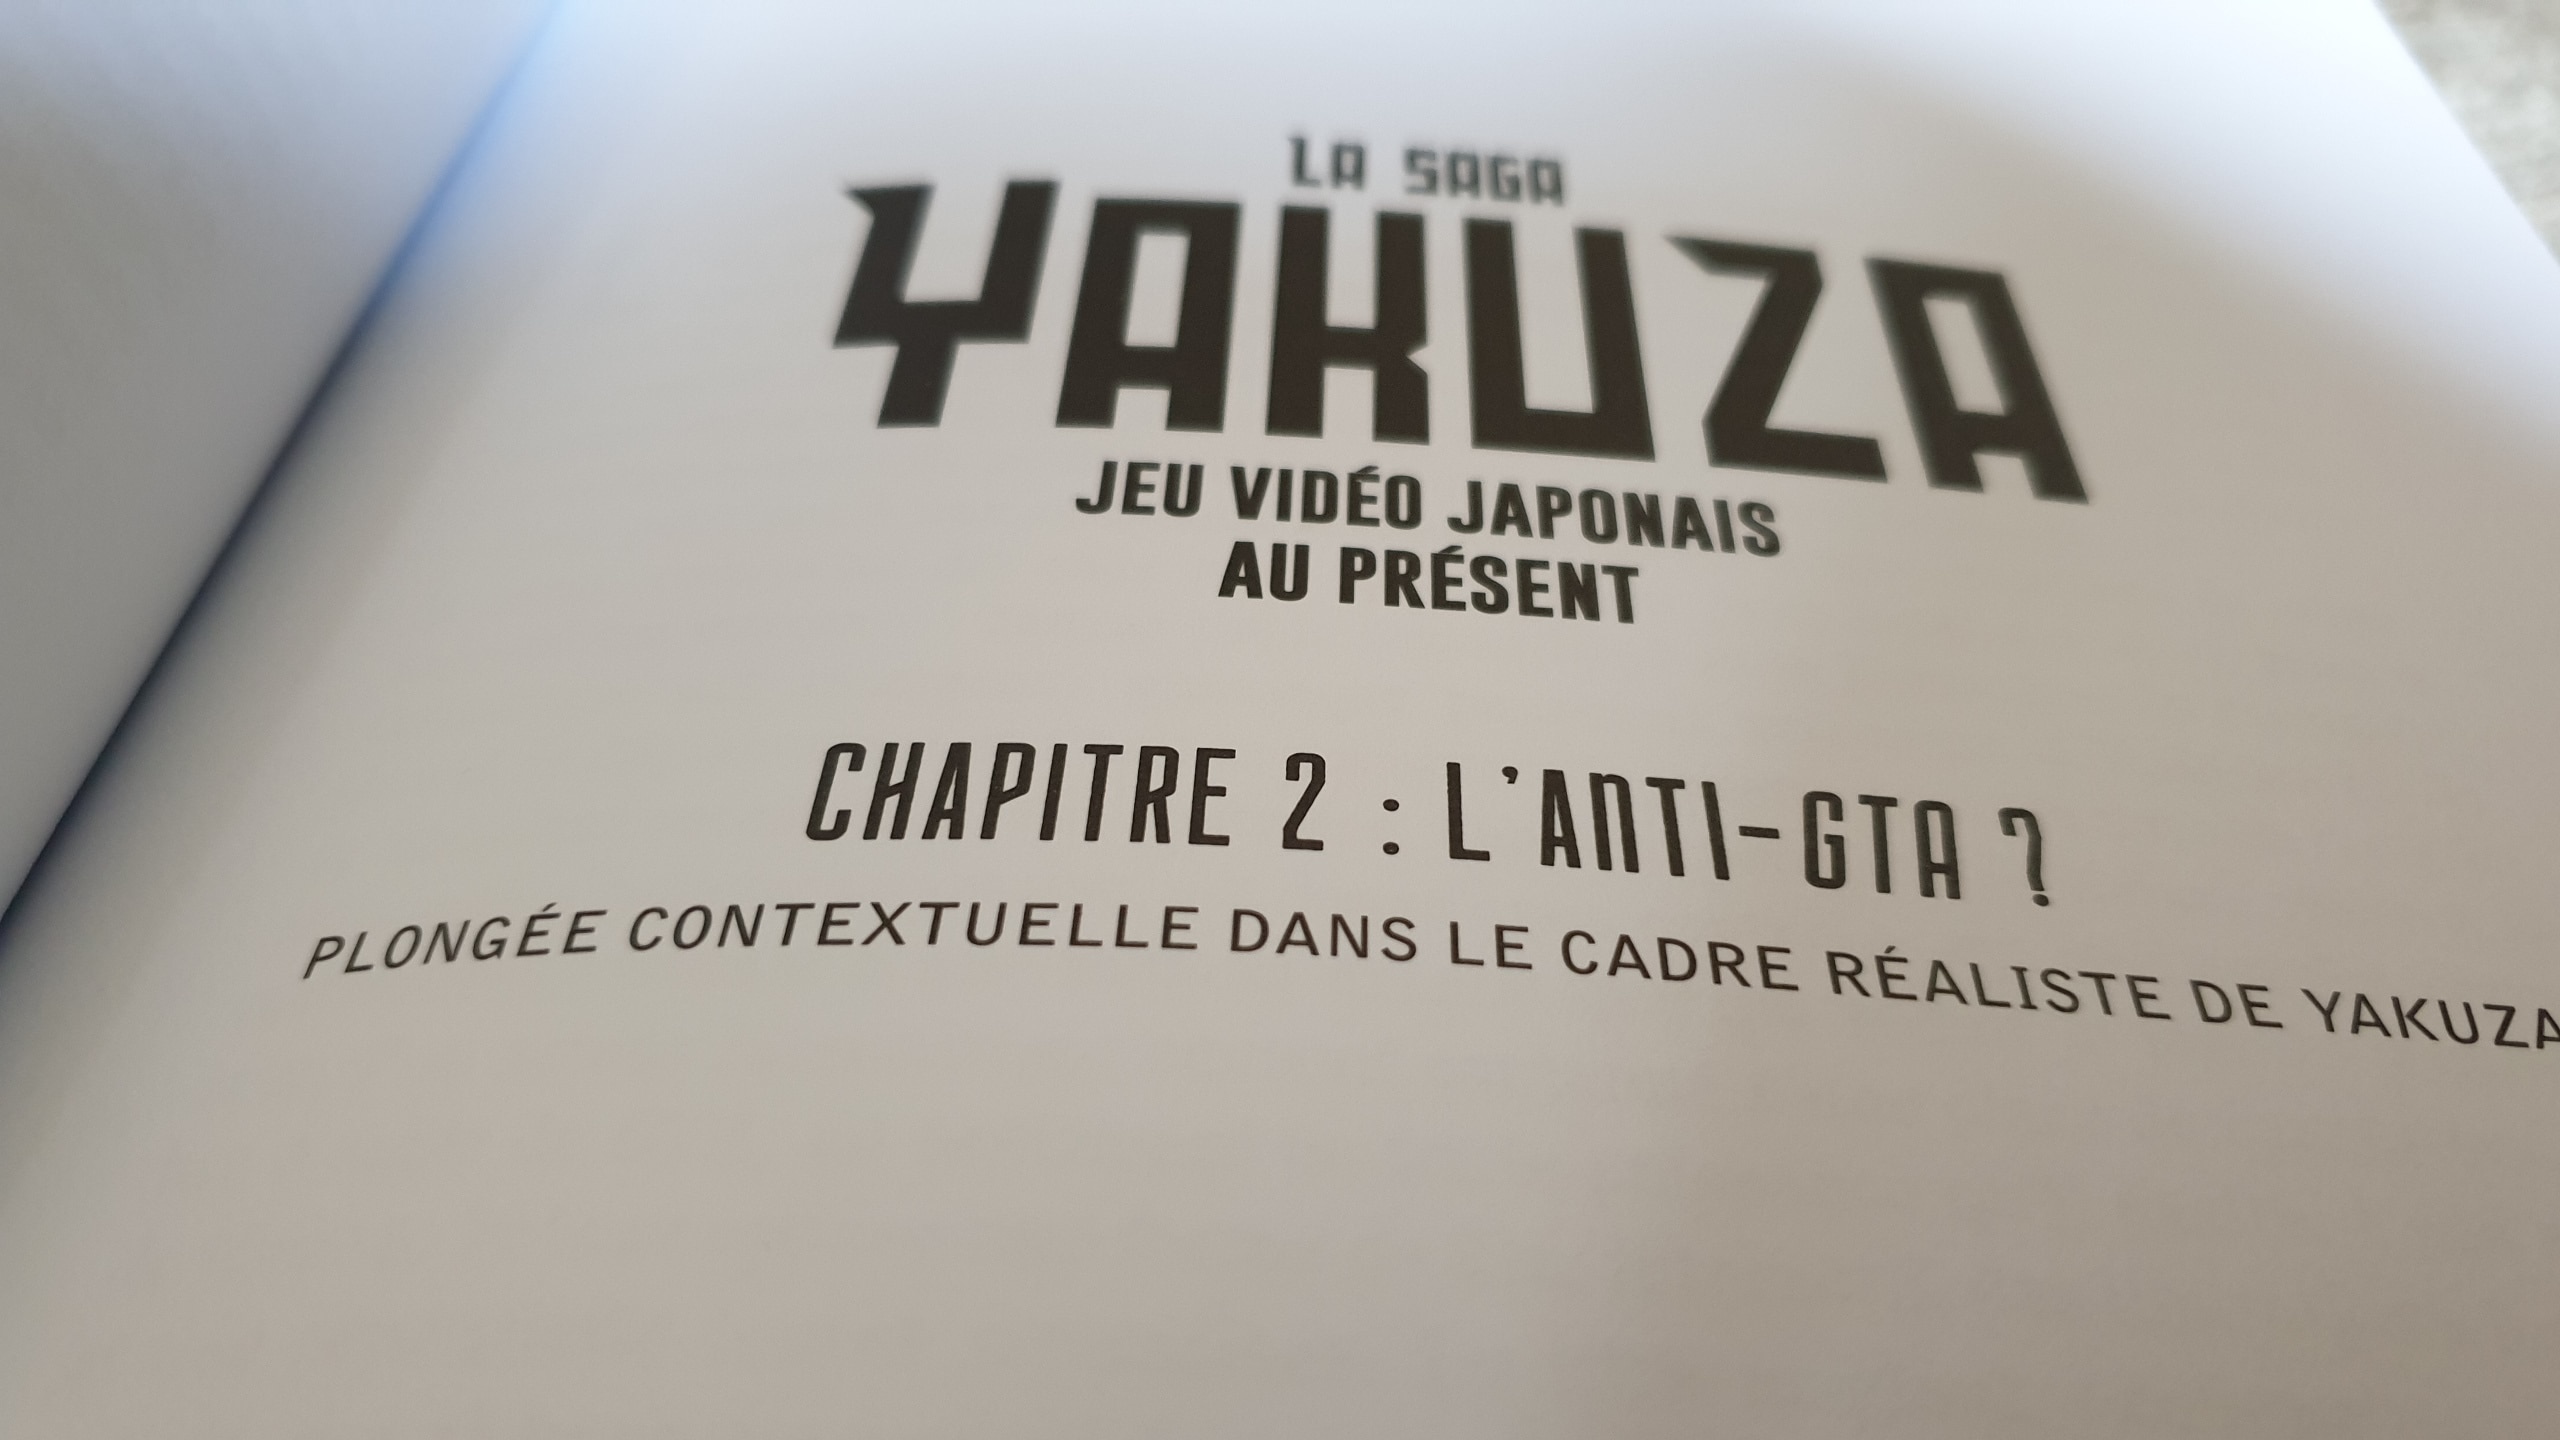 La saga yakuza - gta - comparaison - titre - chapitre